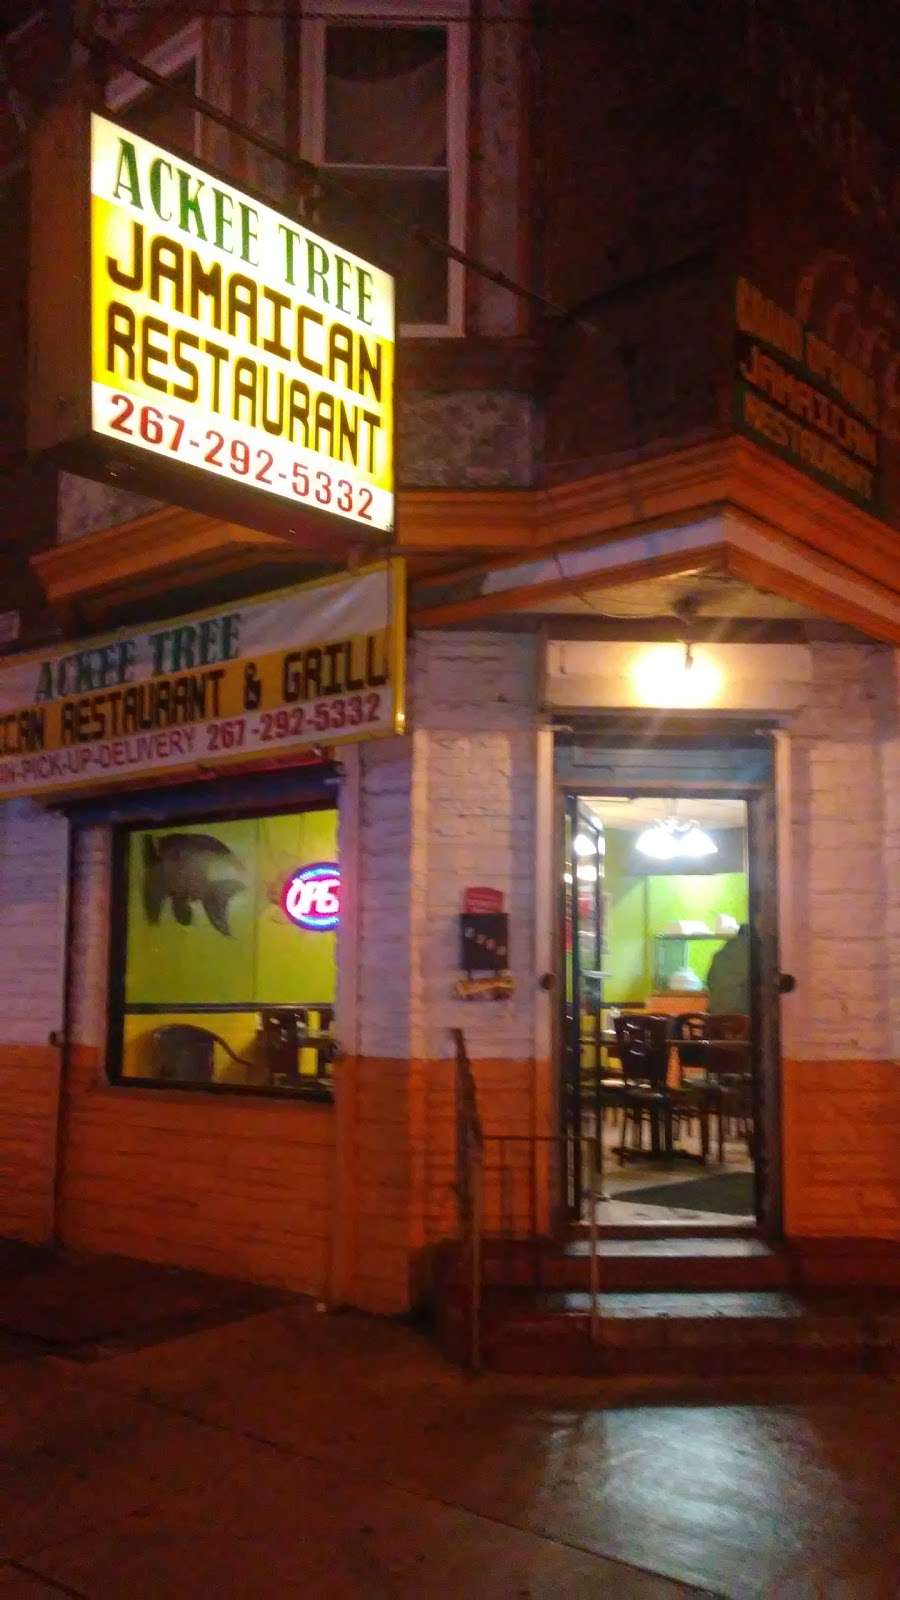 Ackee Tree Jamaican Restaurant | 6631 Woodland Ave, Philadelphia, PA 19142, USA | Phone: (267) 292-5332